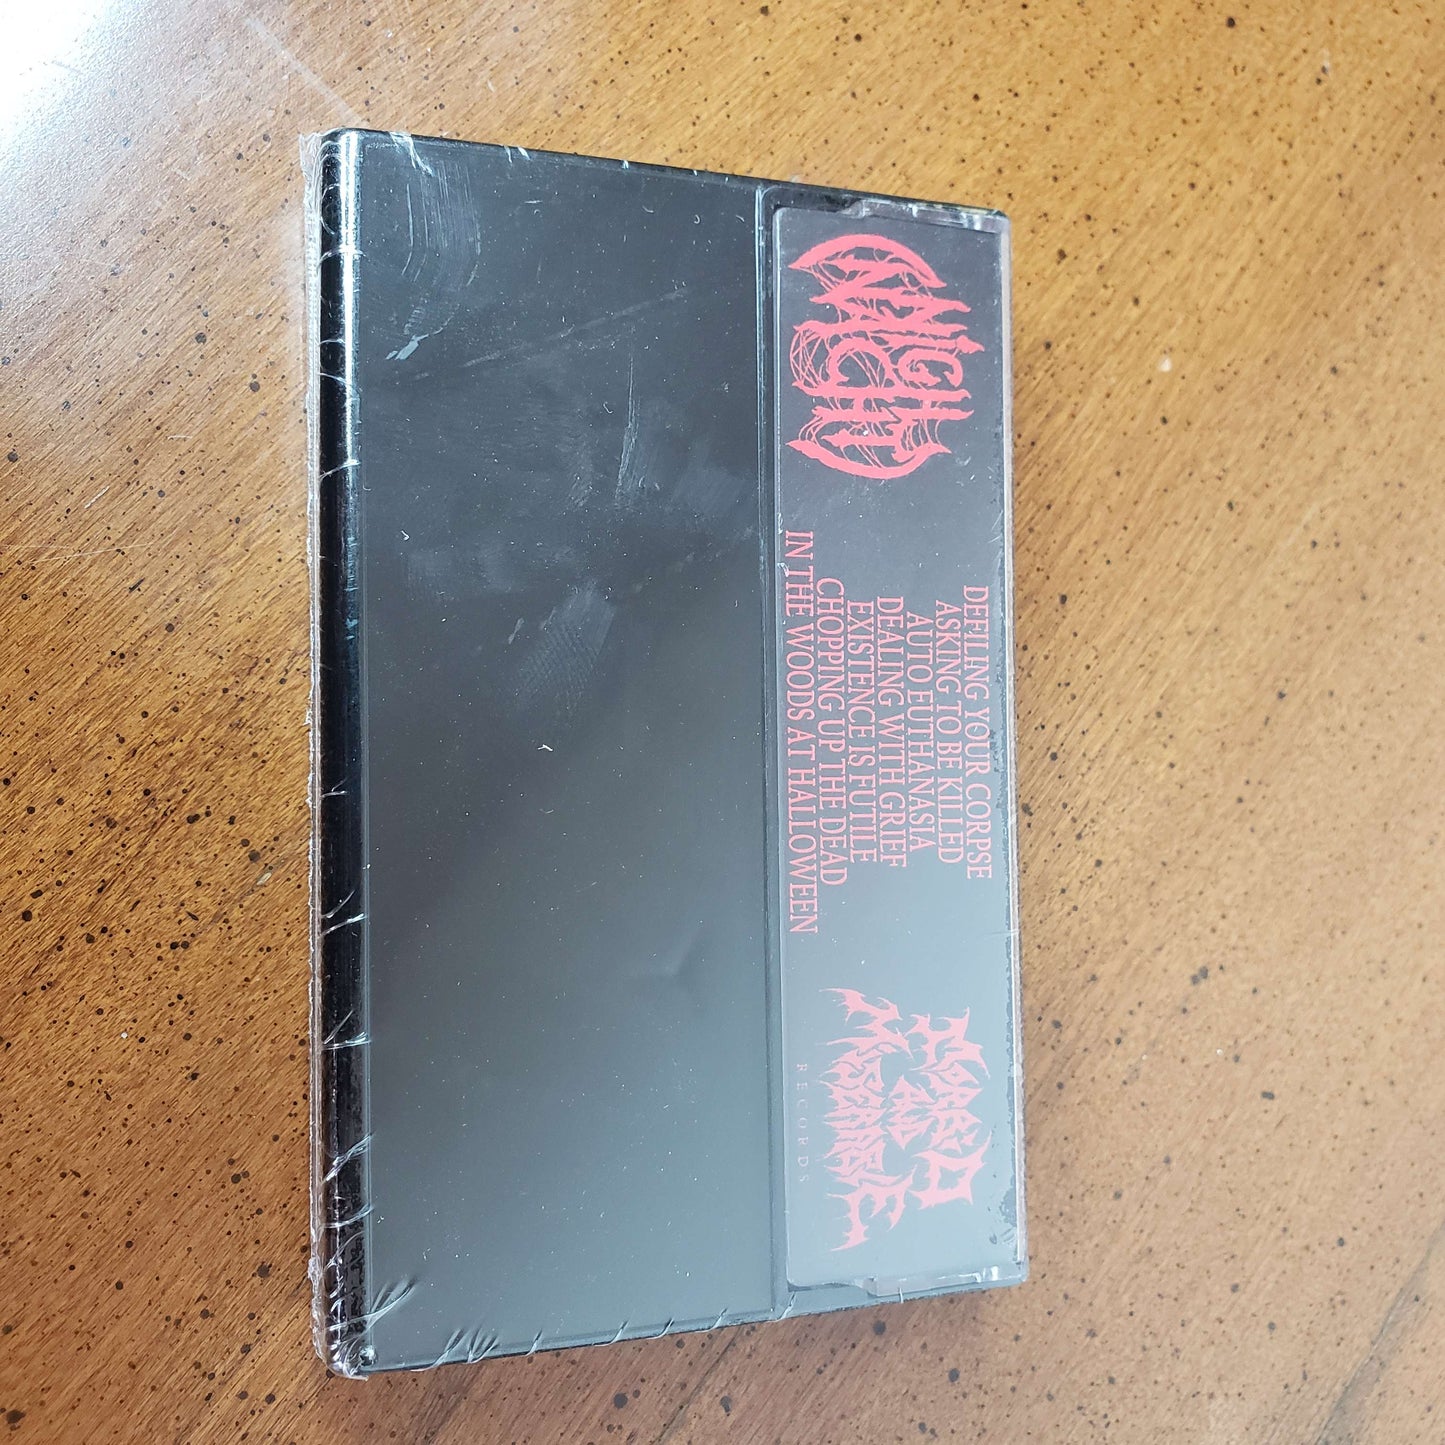 Nighnacht - Asking To Be Killed cassette tape